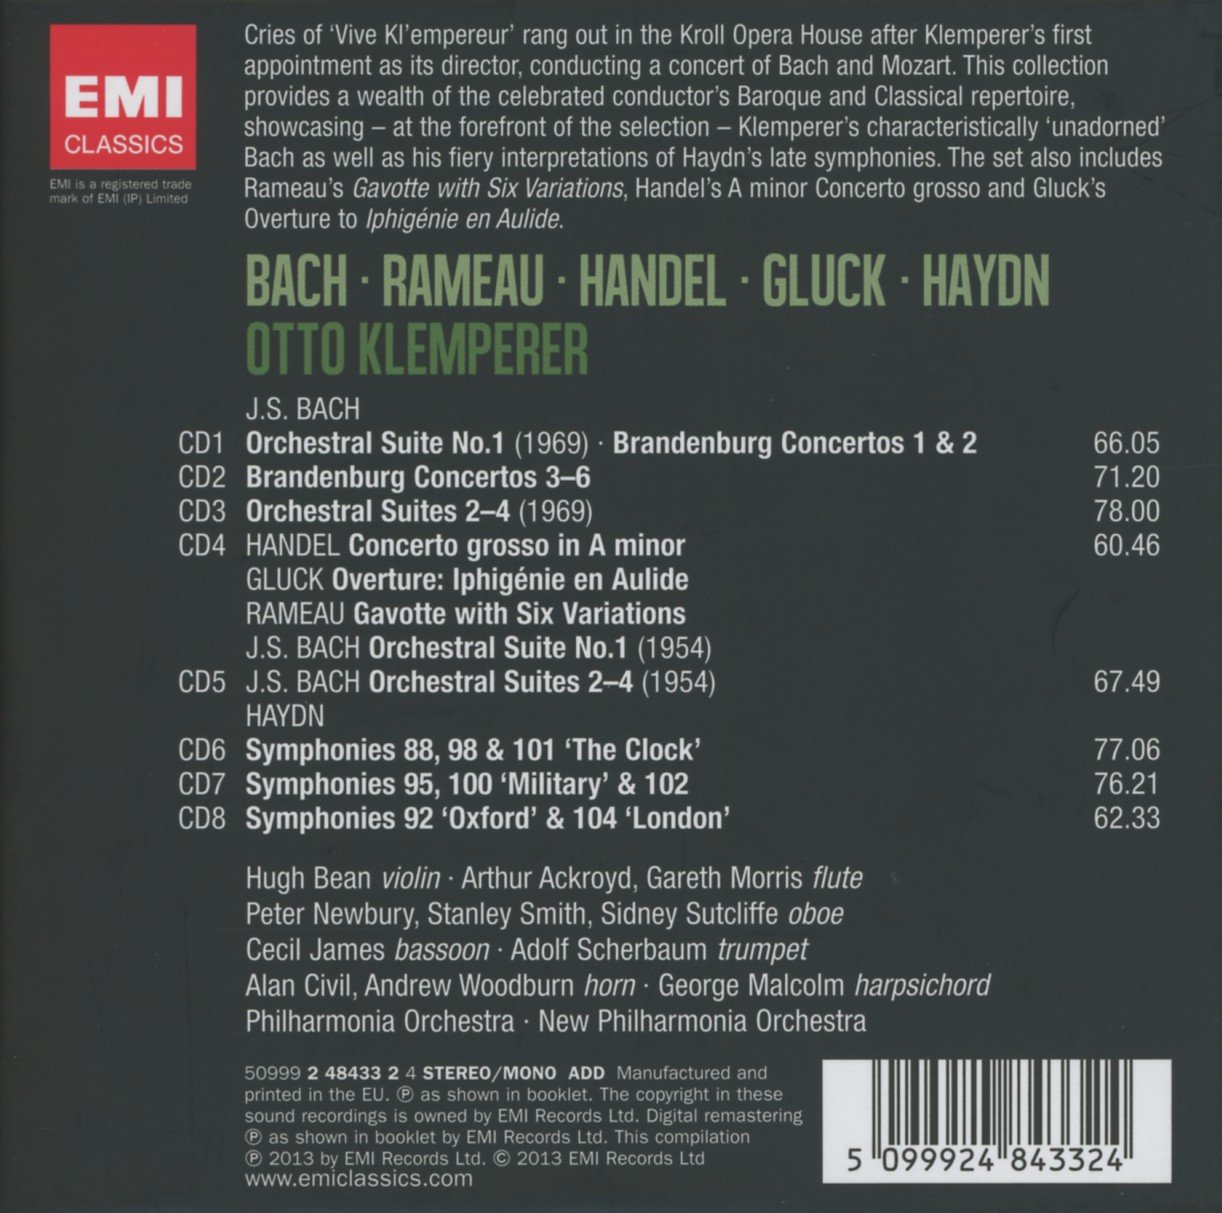 Bach, Rameau, Handel, Gluck & Haydn - 8 CD Boxset | Otto Klemperer